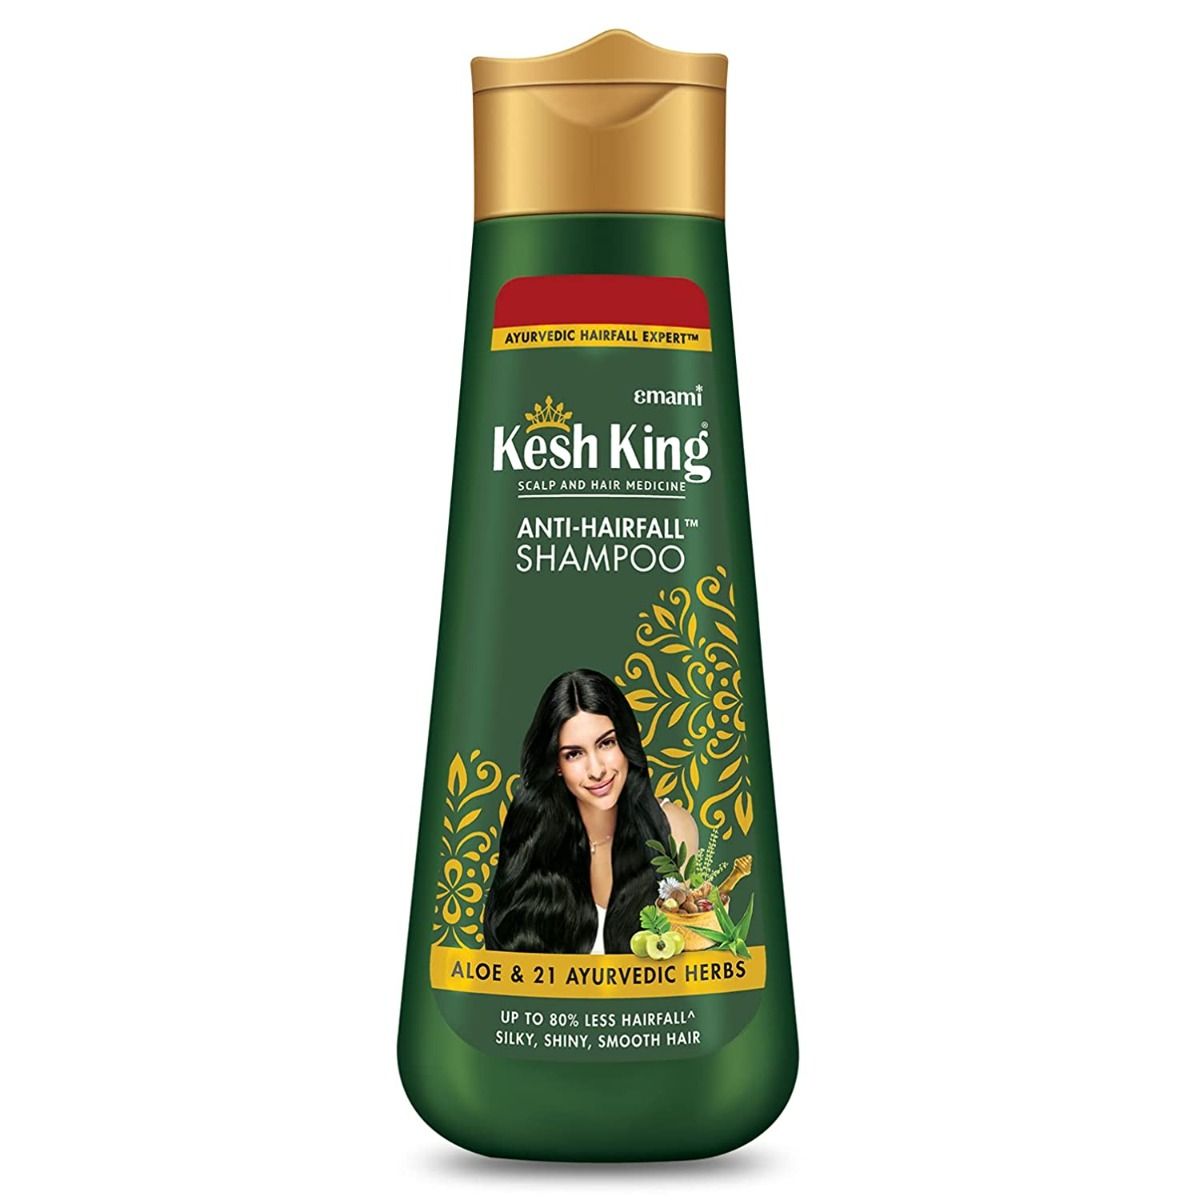 Kesh King Anti-Hairfall Shampoo, 200 ml, Pack of 1 